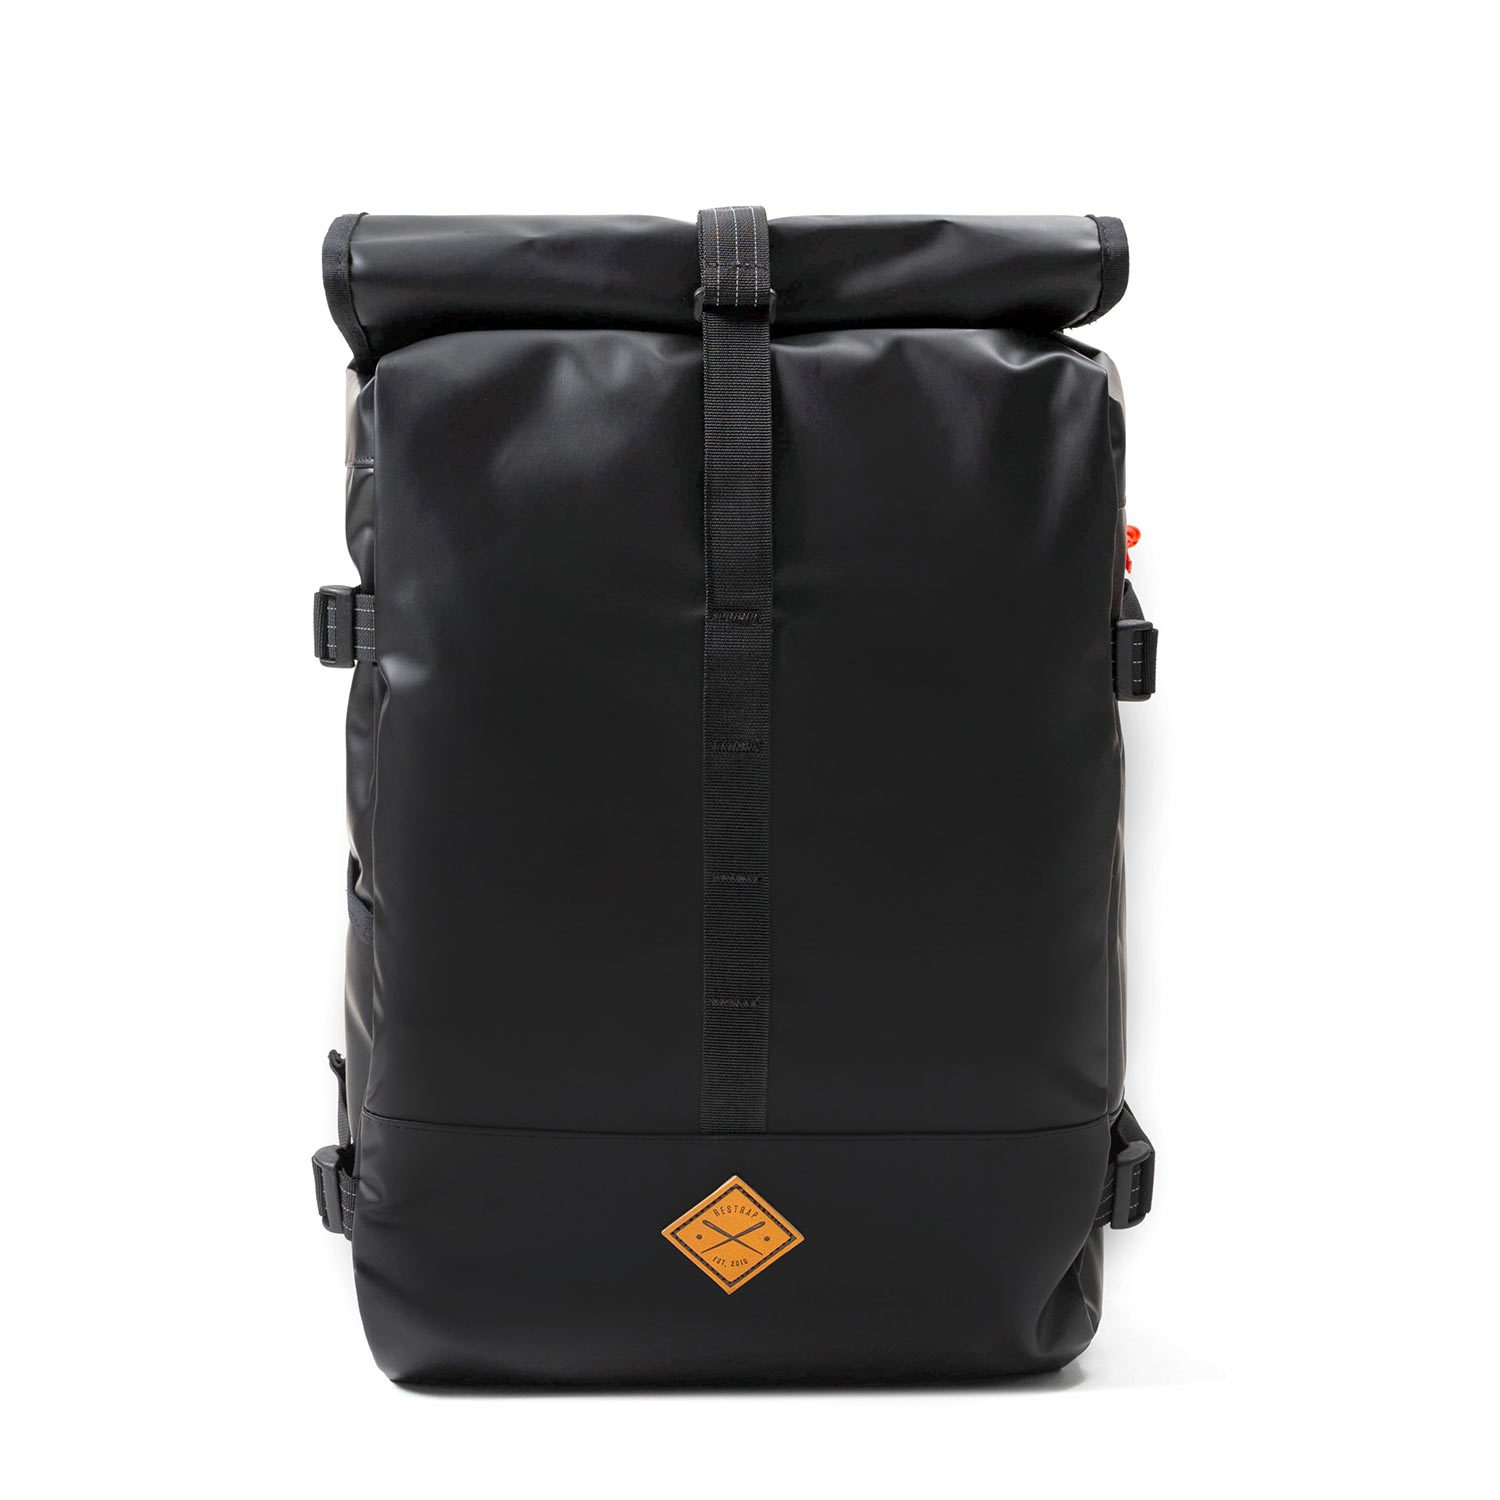 Restrap Travel bag range, waterproof Utility Hip Pack & Rolltop Backpacks, 40L backpack